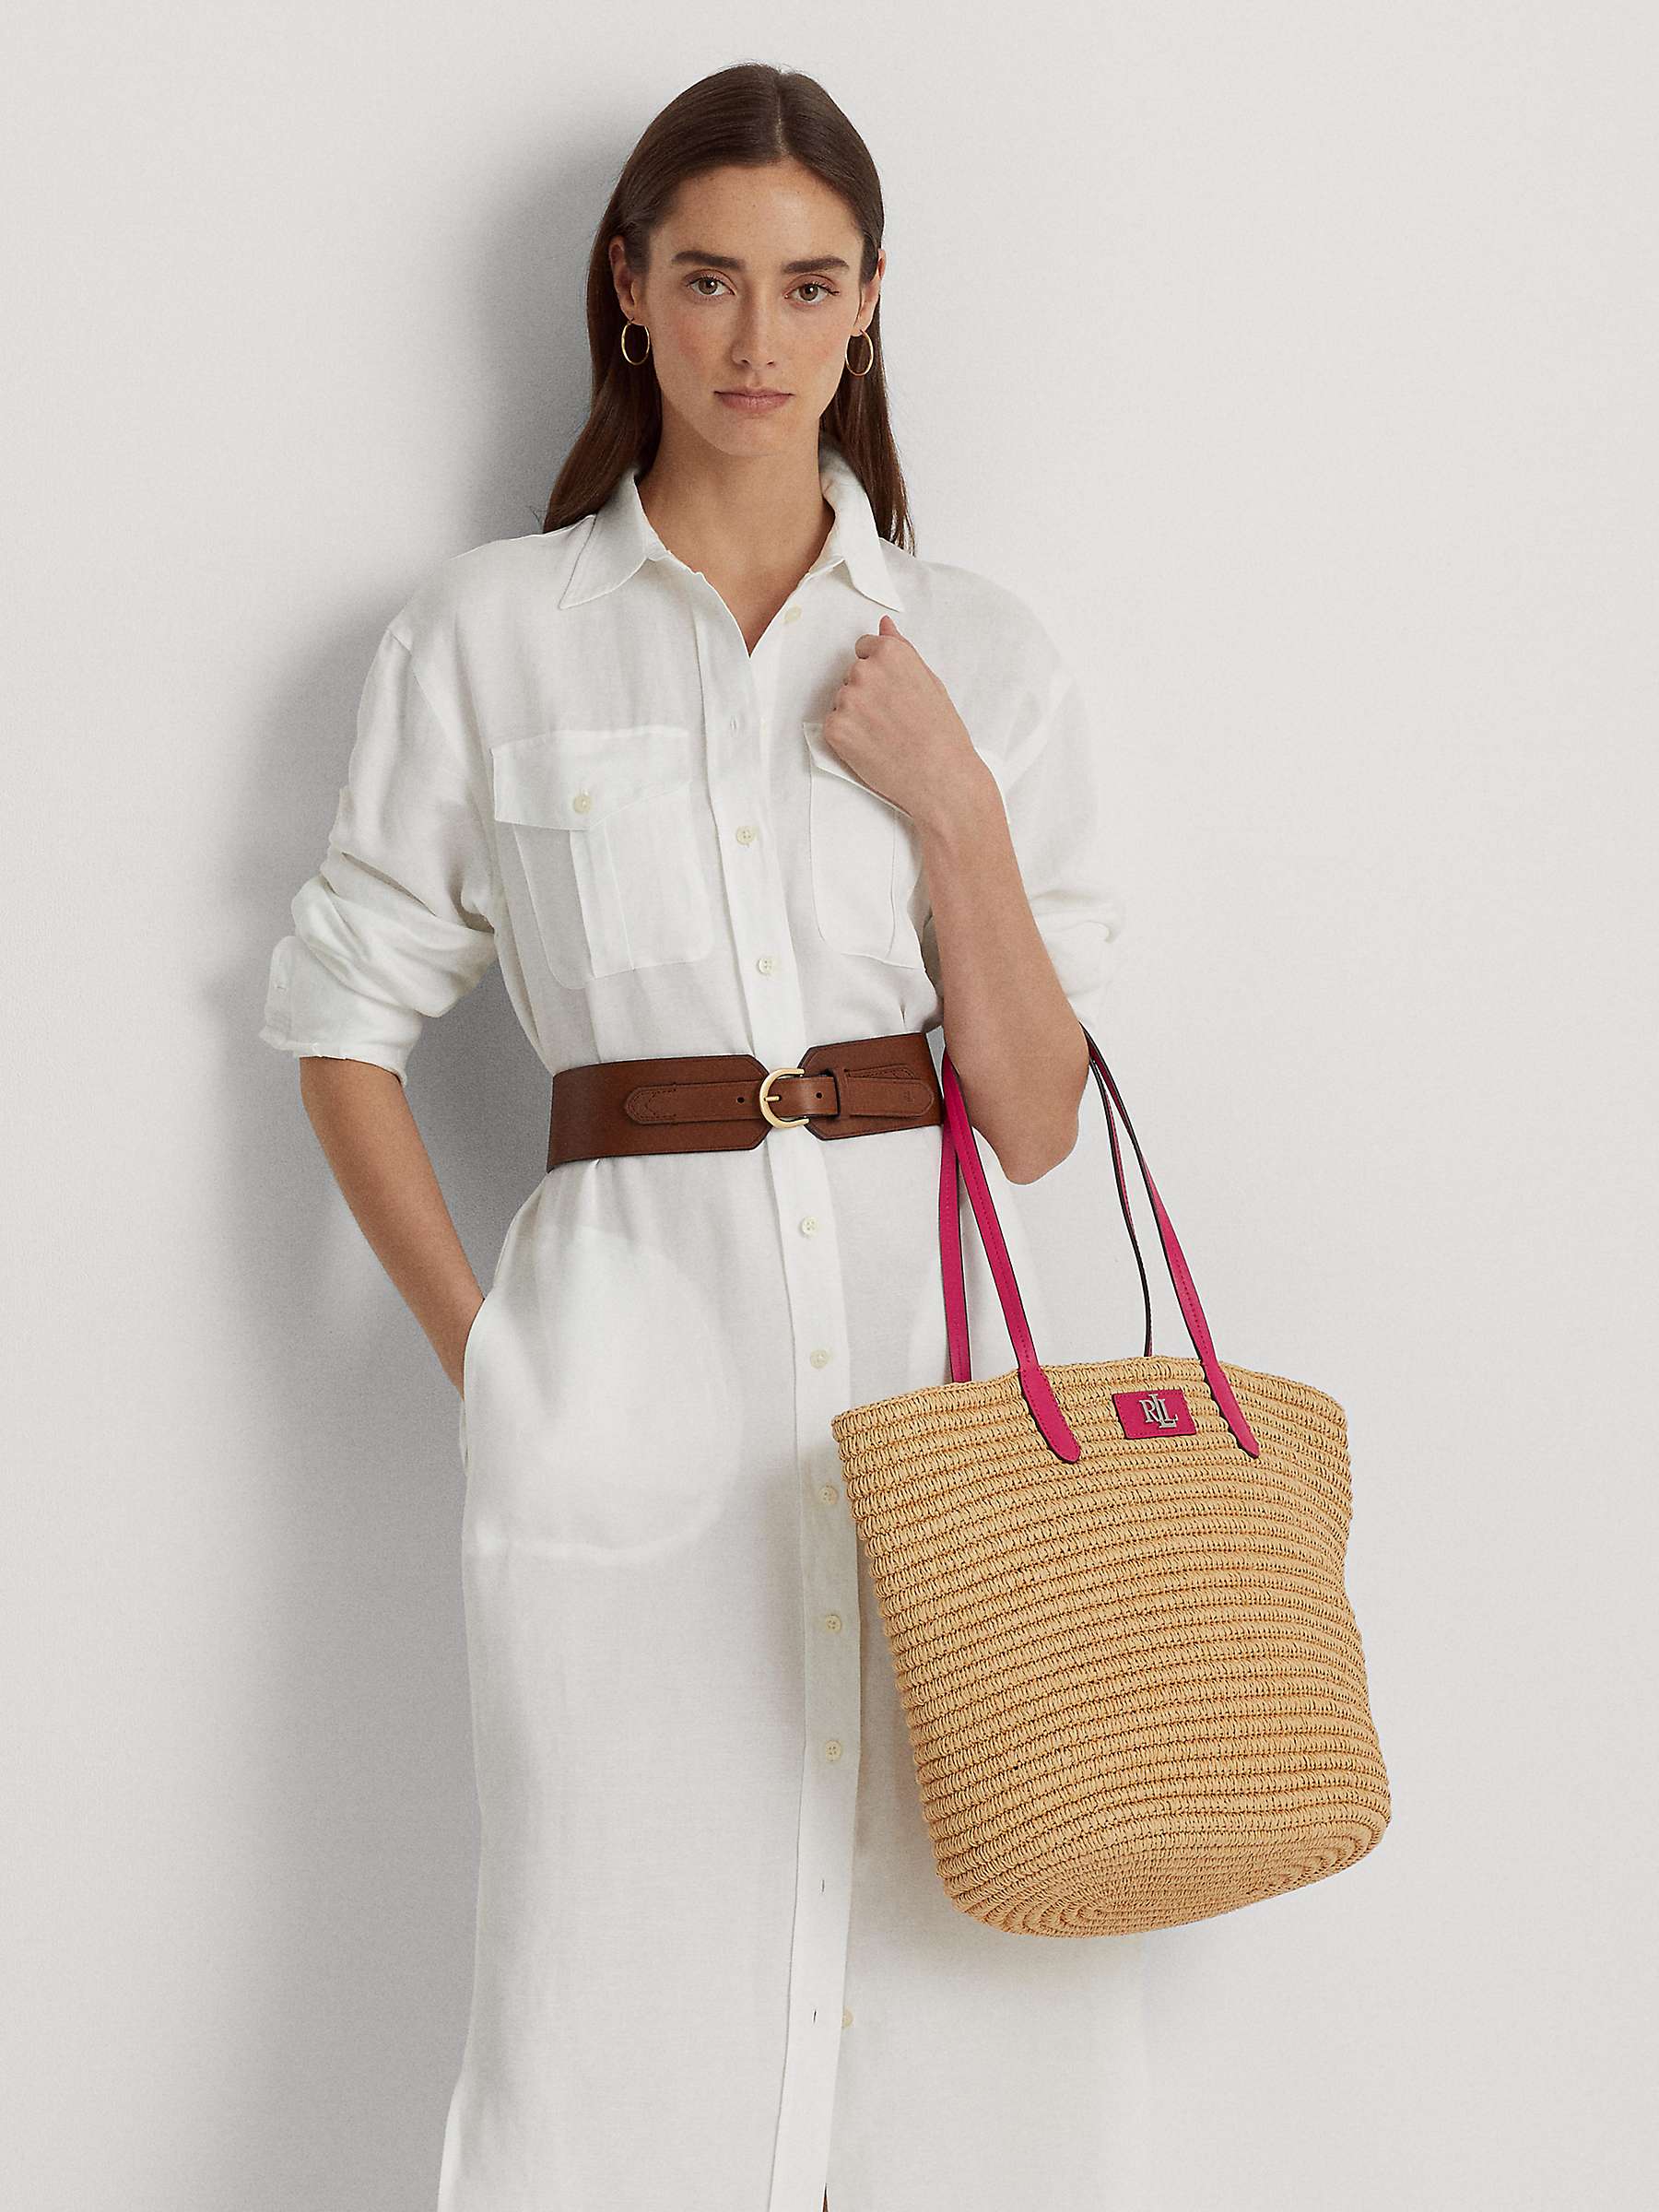 Buy Lauren Ralph Lauren Brie Straw Tote Bag with Pouch Online at johnlewis.com